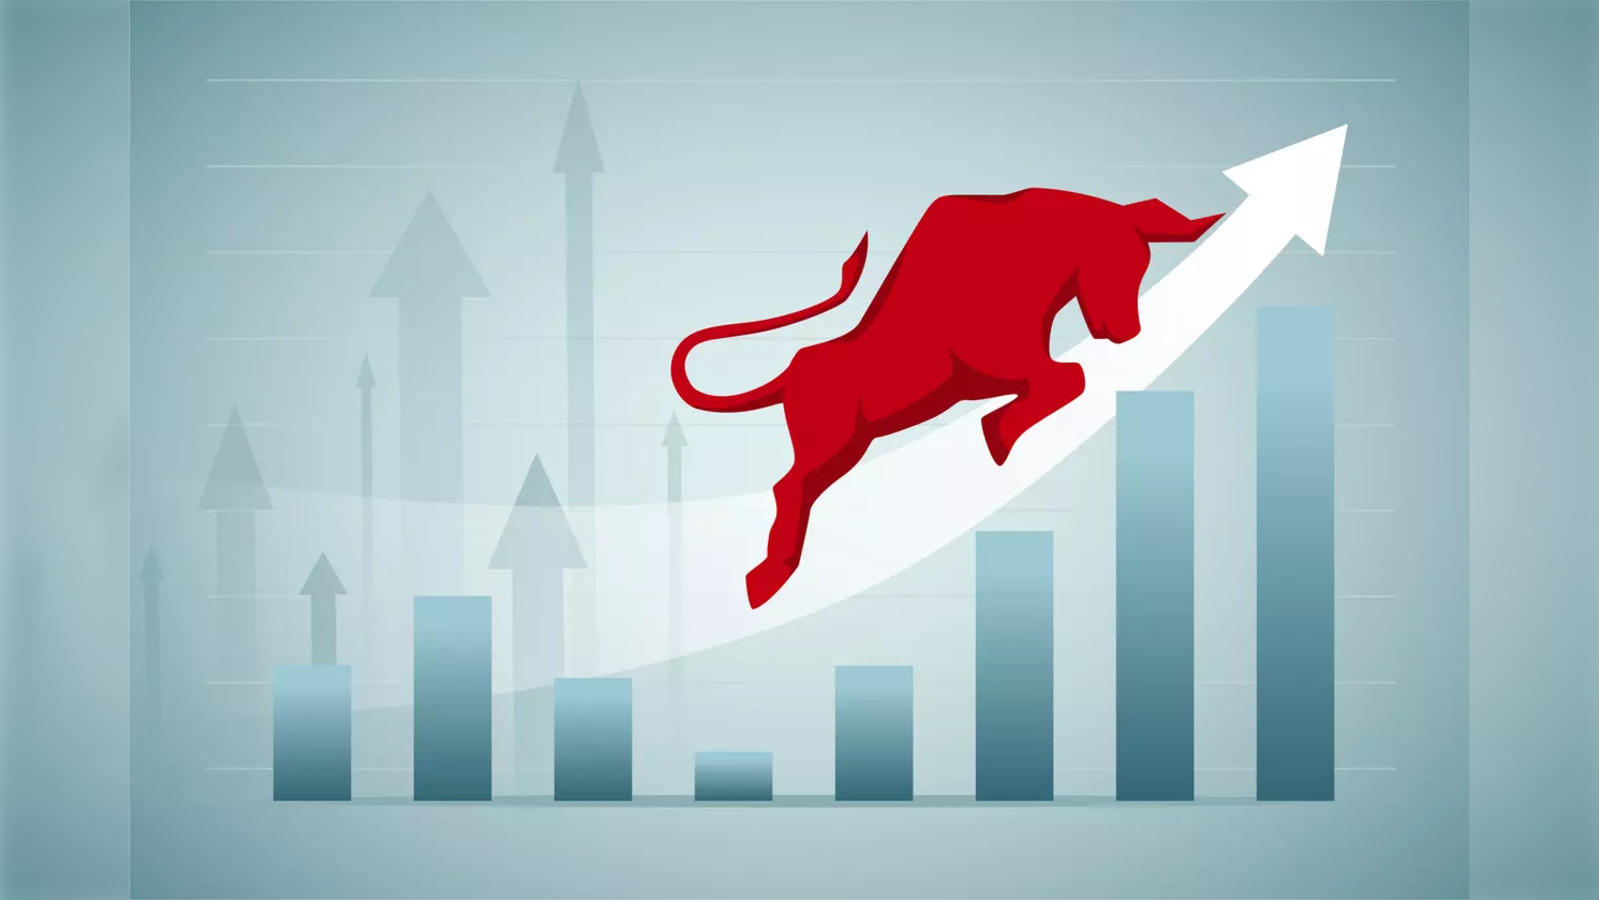 Vector of bull and bear symbols of stock market. - Stock Illustration  [50193685] - PIXTA